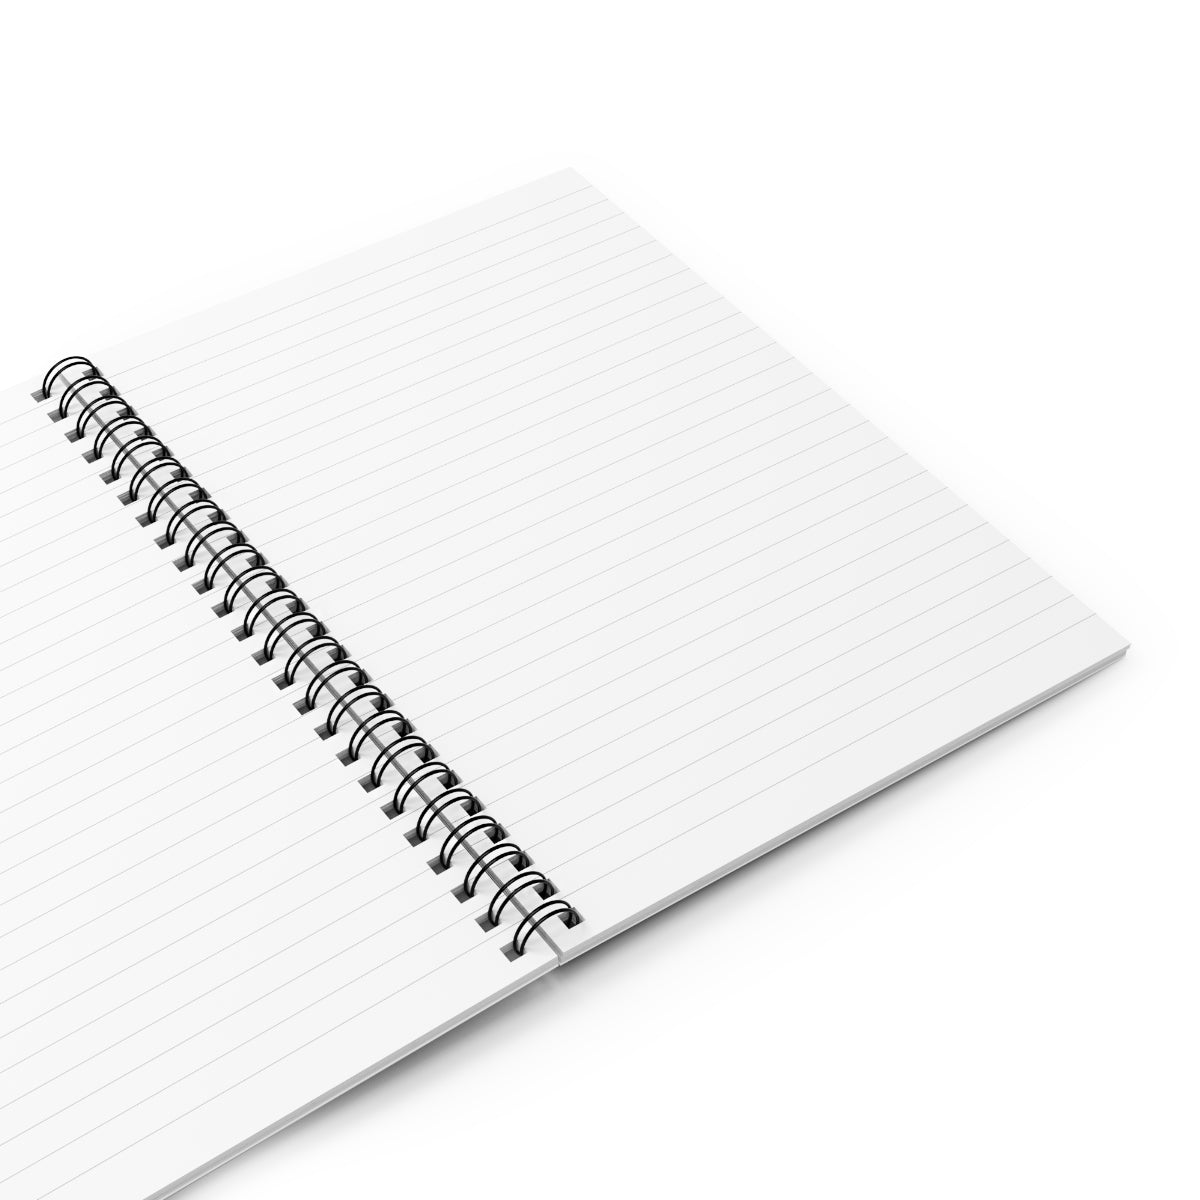 Green Spiral Ruled Line Notebook